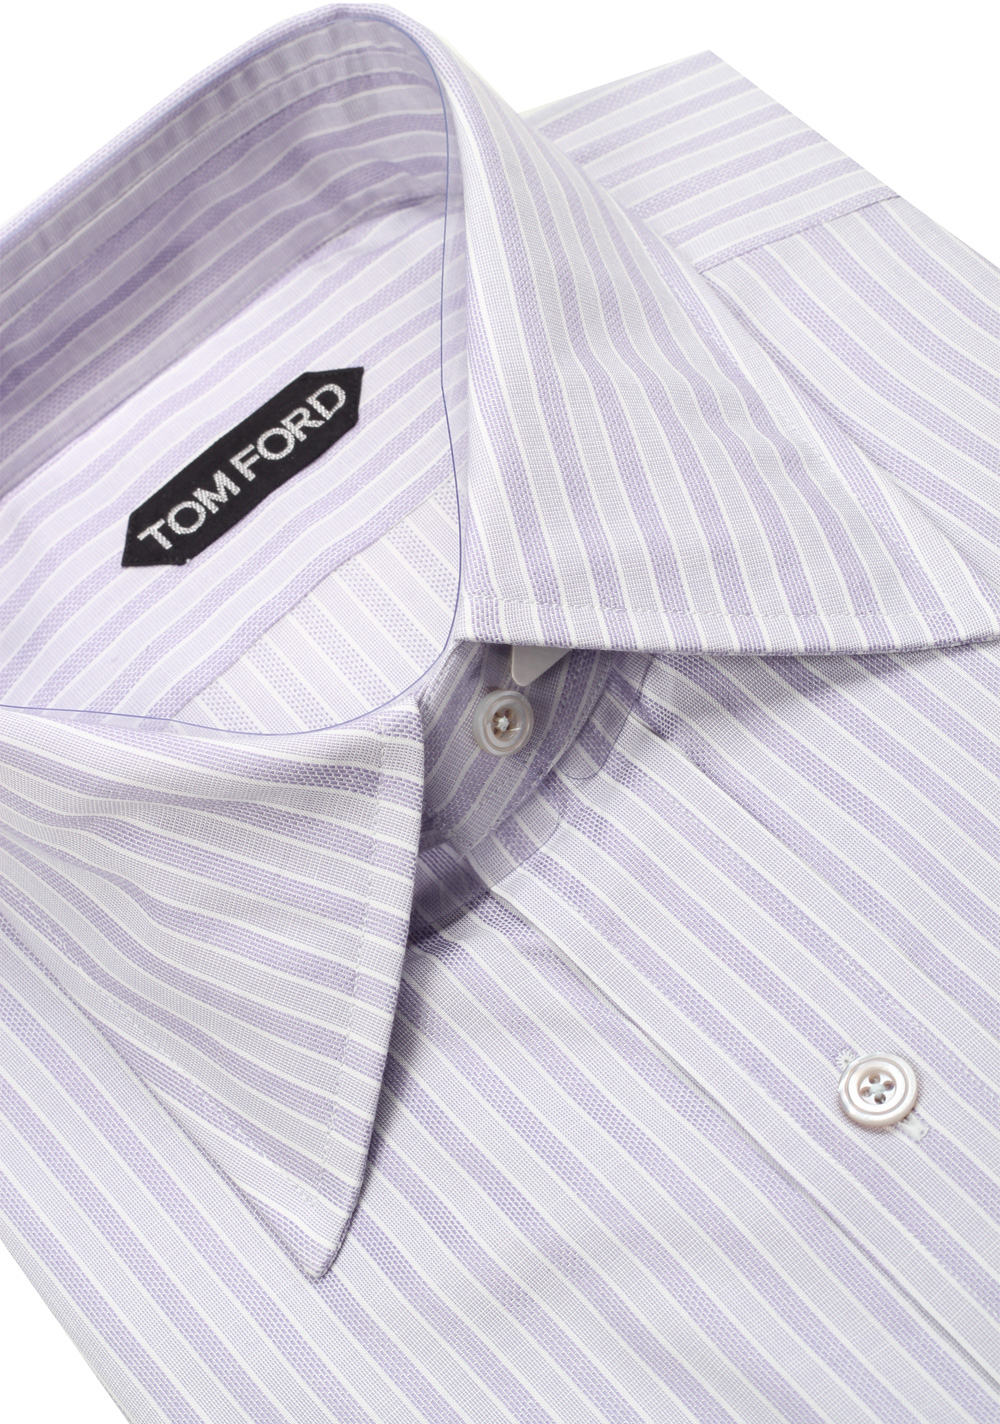 TOM FORD Striped Grayish Purple High Collar Dress Shirt Size 40 / 15,75 U.S. | Costume Limité